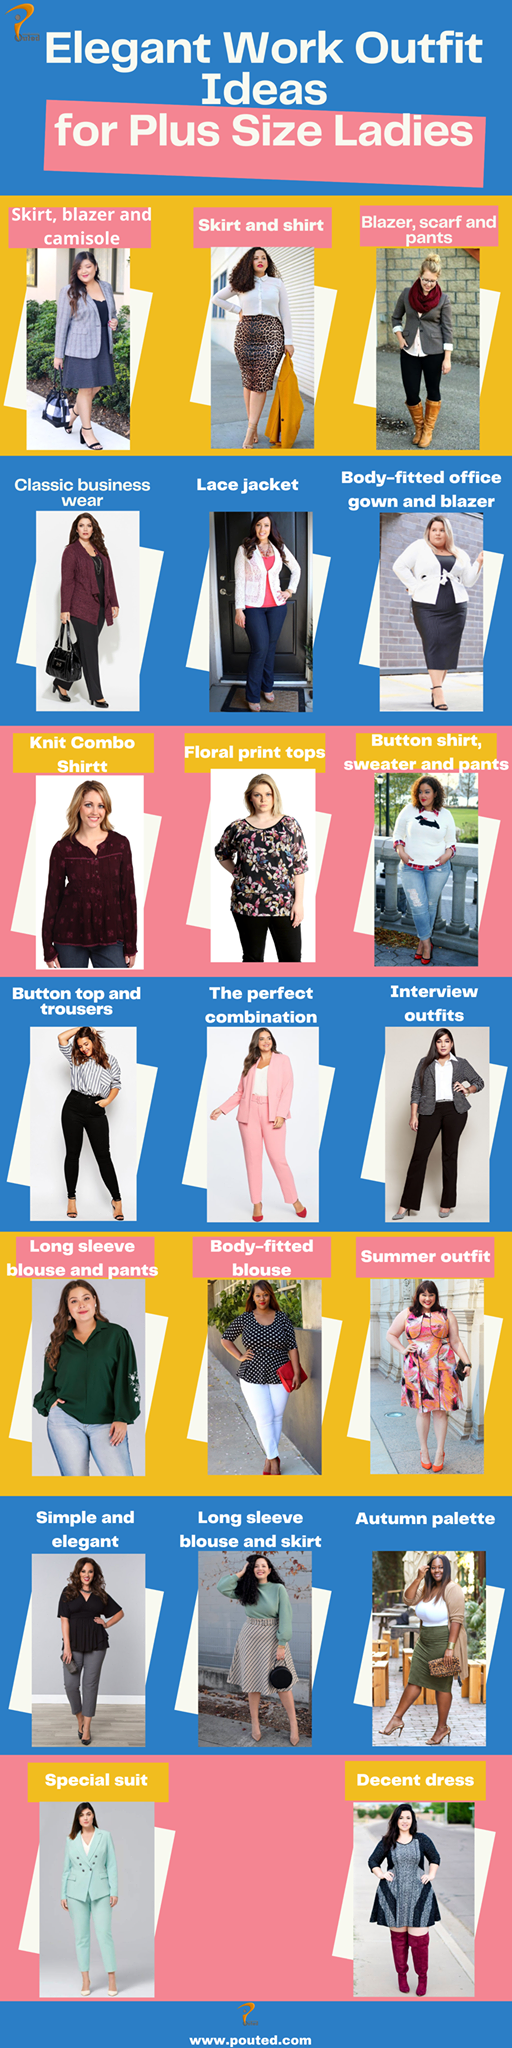 Elegant Work Outfit Ideas for Plus-Size Ladies